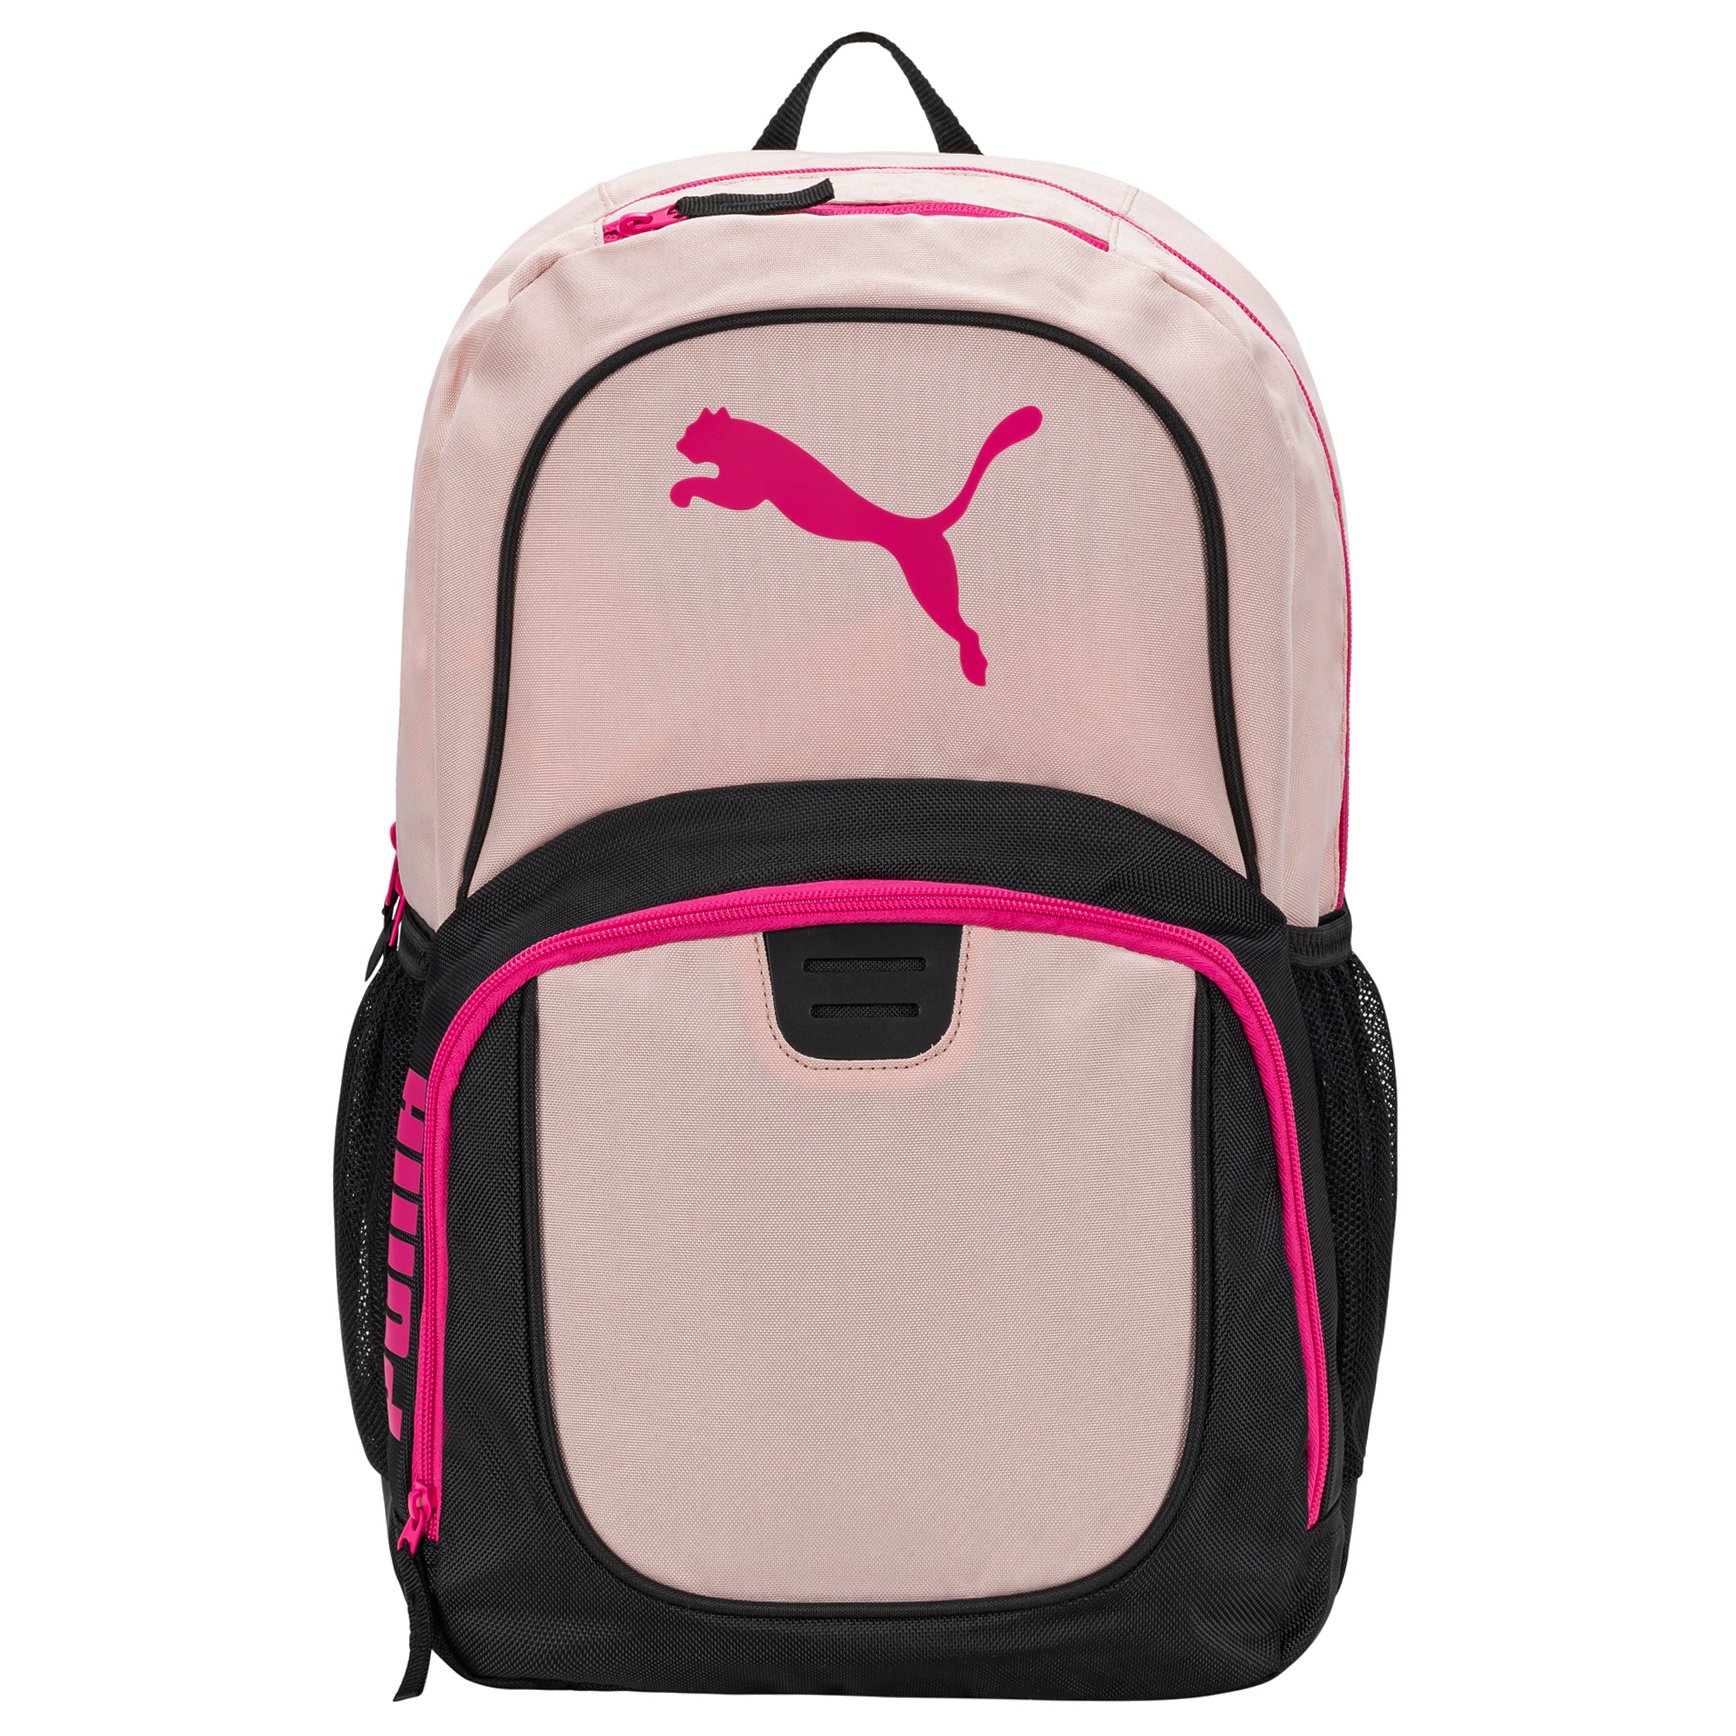 Raadplegen dichters crisis Puma Classic Core Backpack - Pink/Black - Shop Backpacks at H-E-B